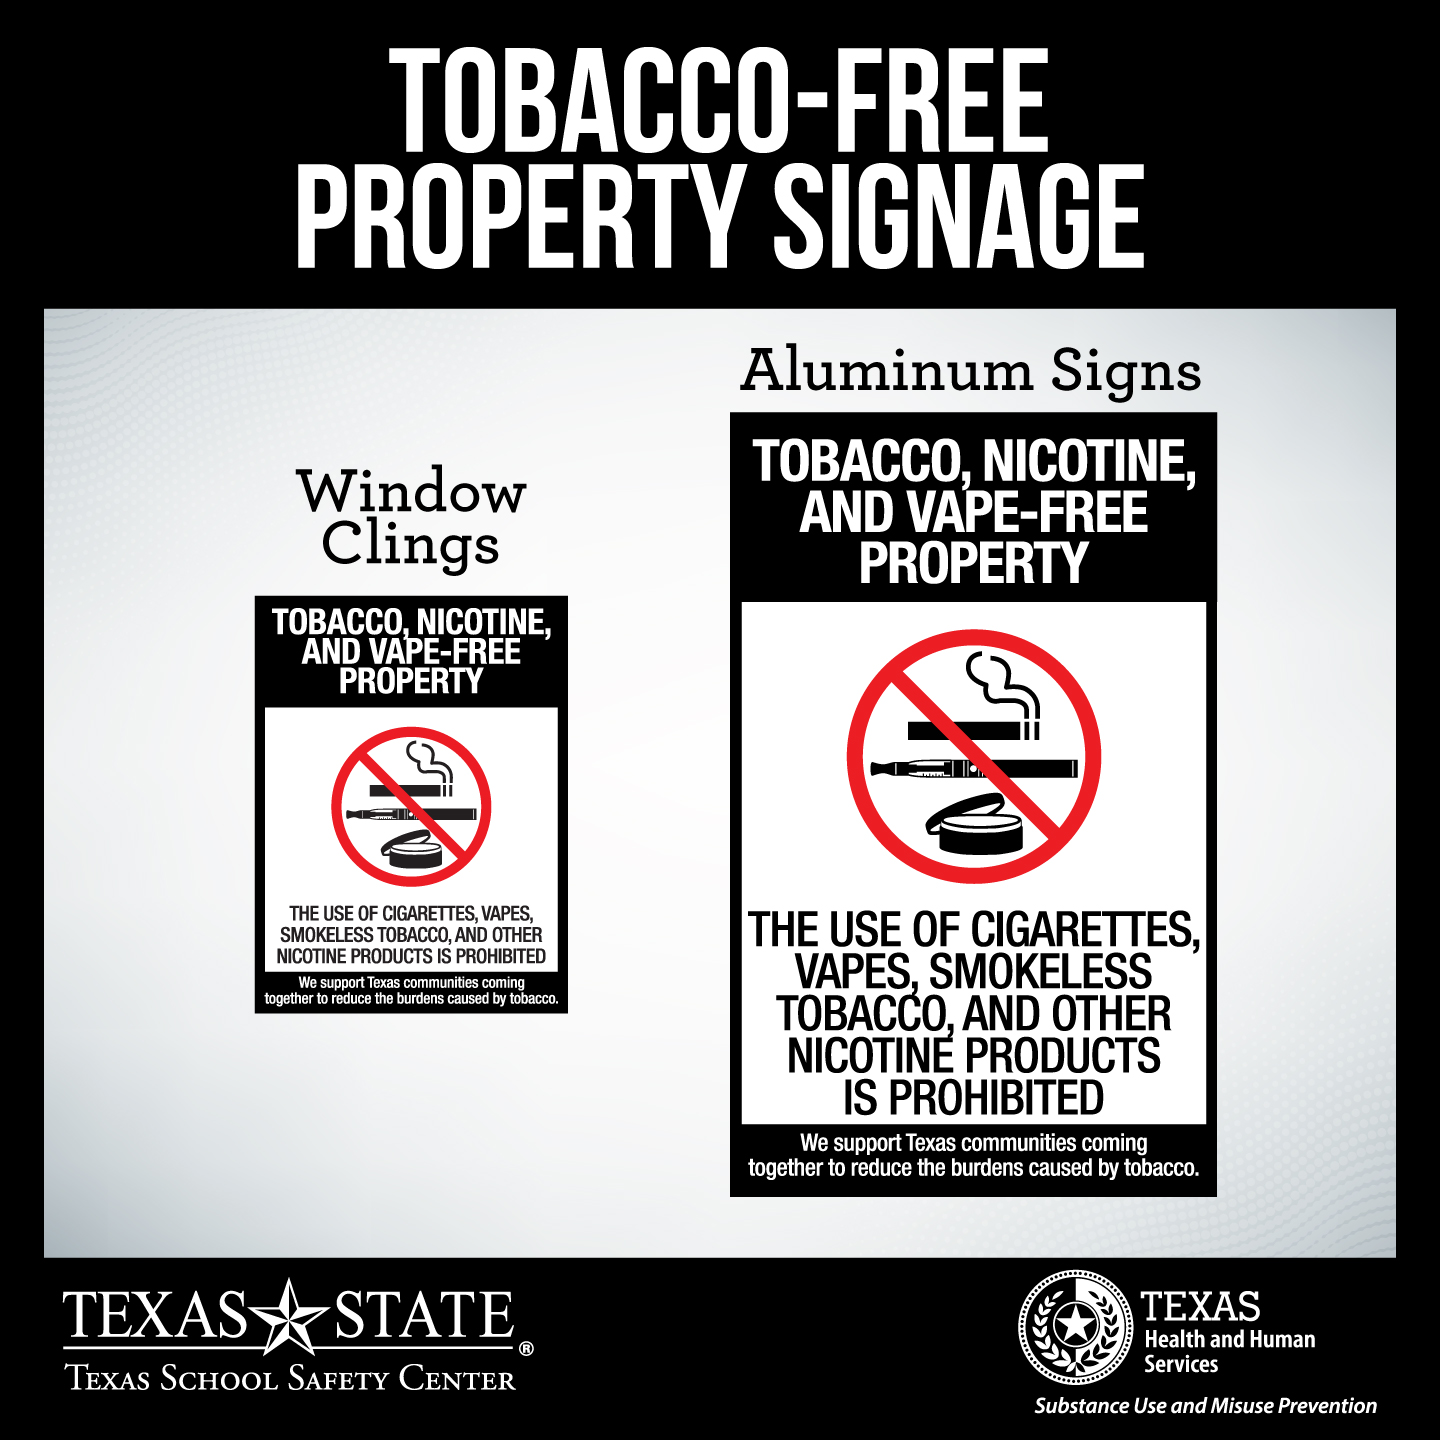 Tobacco-Free Property Signage